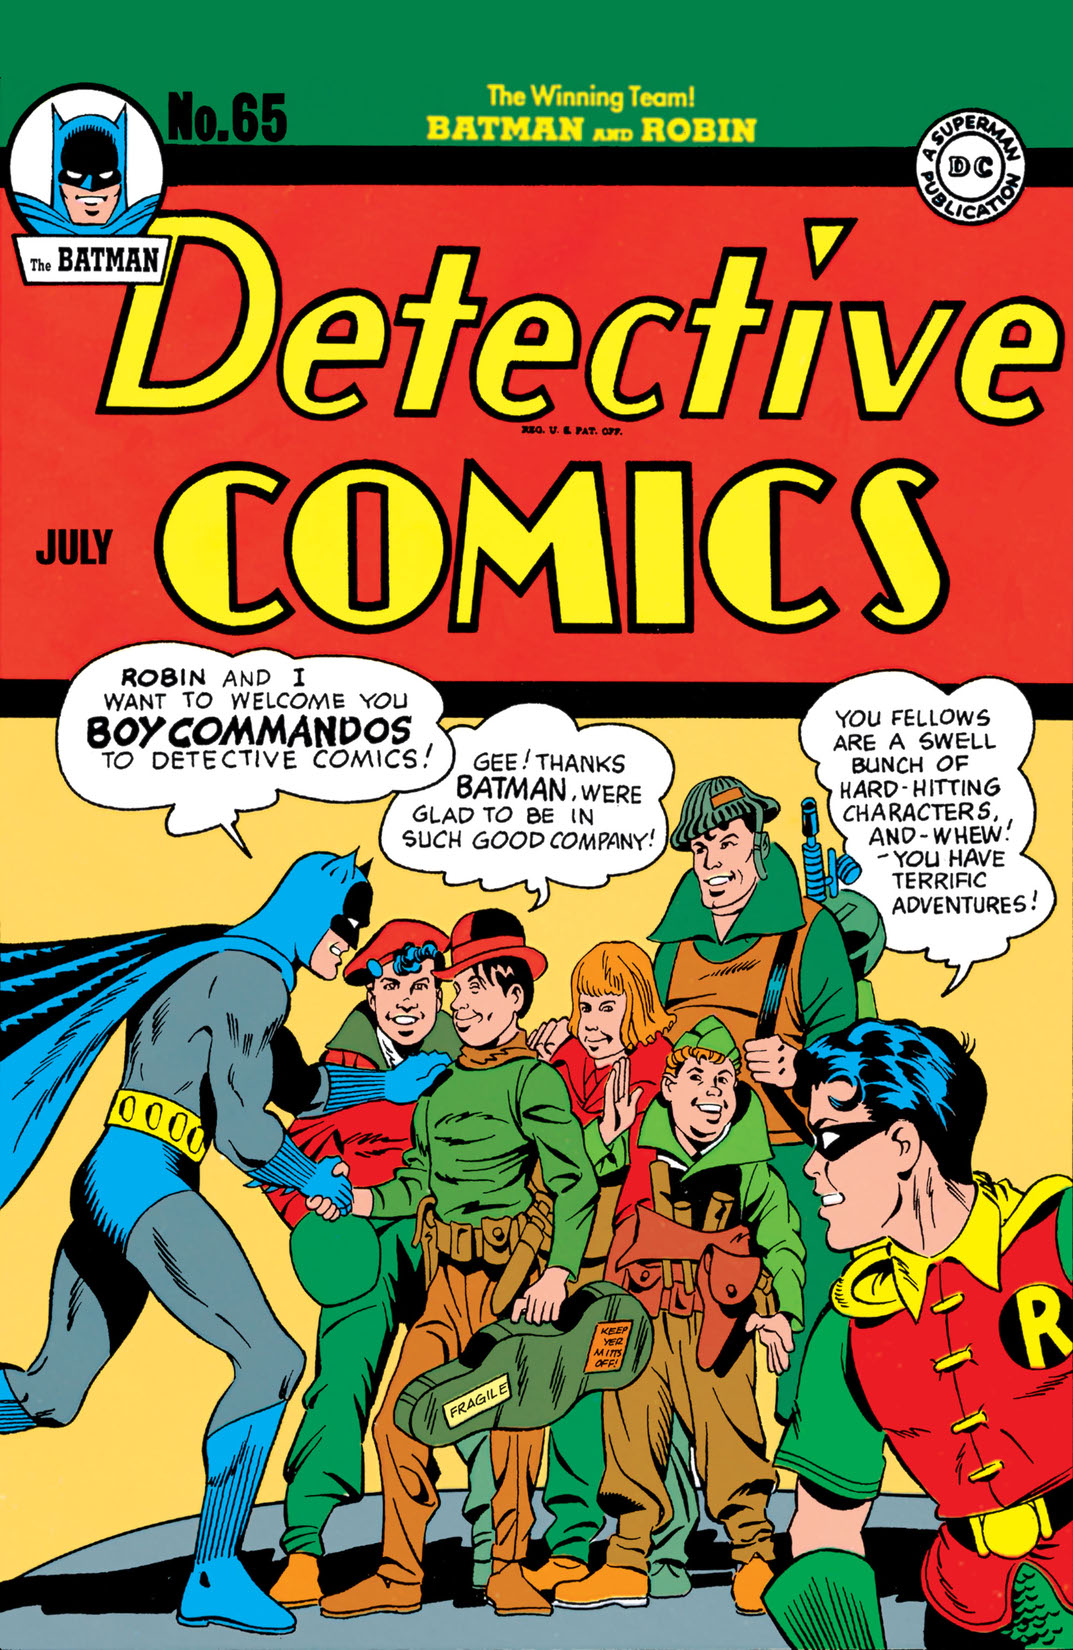 Detective Comics (1942-) #65 preview images